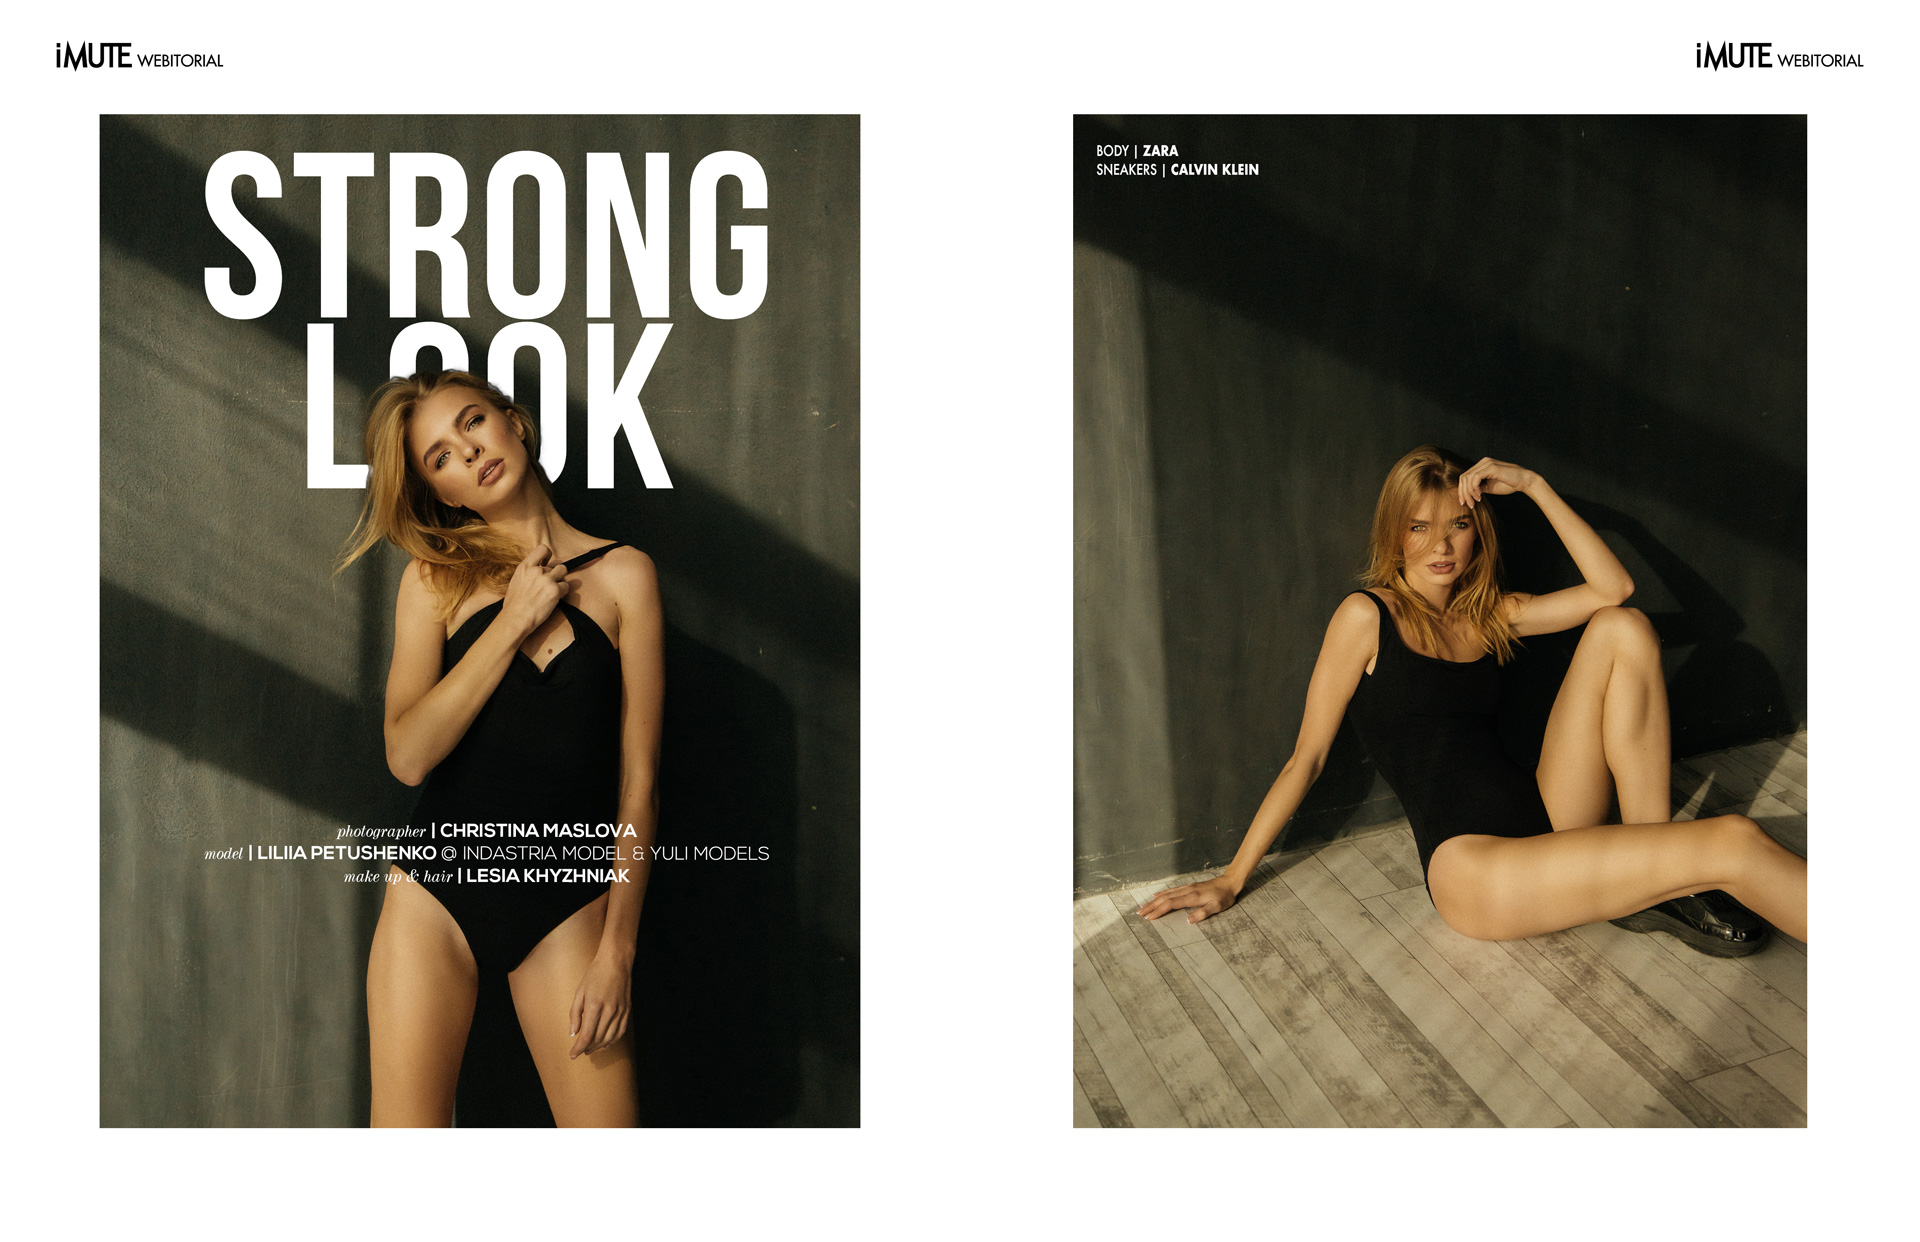 Strong look webitorial for iMute Magazine  PHOTOGRAPHER | CHRISTINA MASLOVA MODEL | LILIIA PETUSHENKO @ INDASTRIA MODEL & YULI MODELS  MAKEUP & HAIR | LESIA KHYZHNIAK